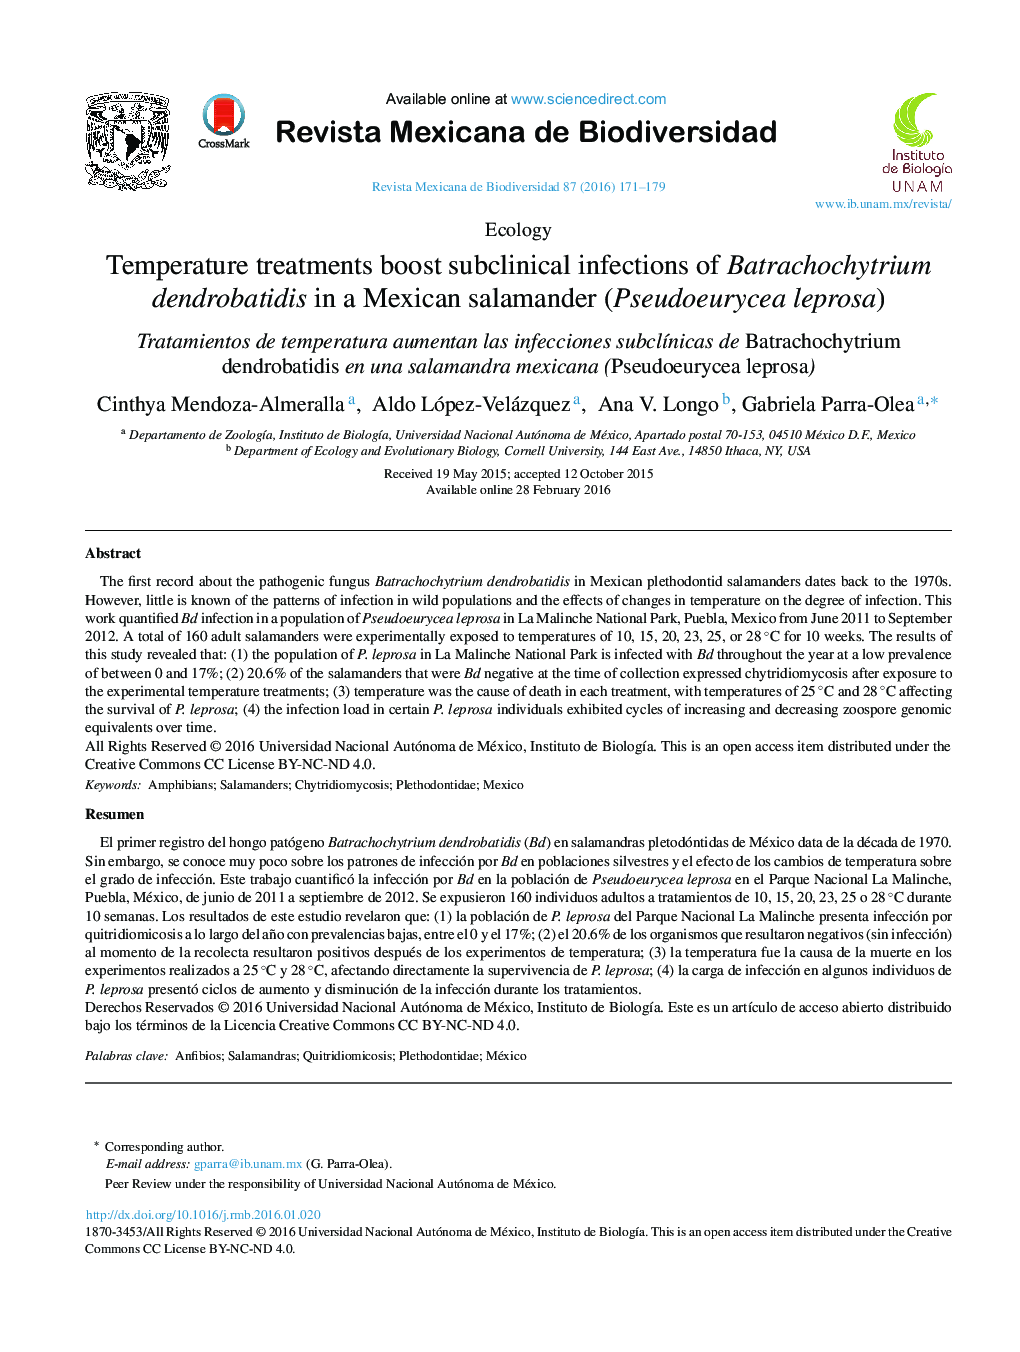 Temperature treatments boost subclinical infections of Batrachochytrium dendrobatidis in a Mexican salamander (Pseudoeurycea leprosa) 